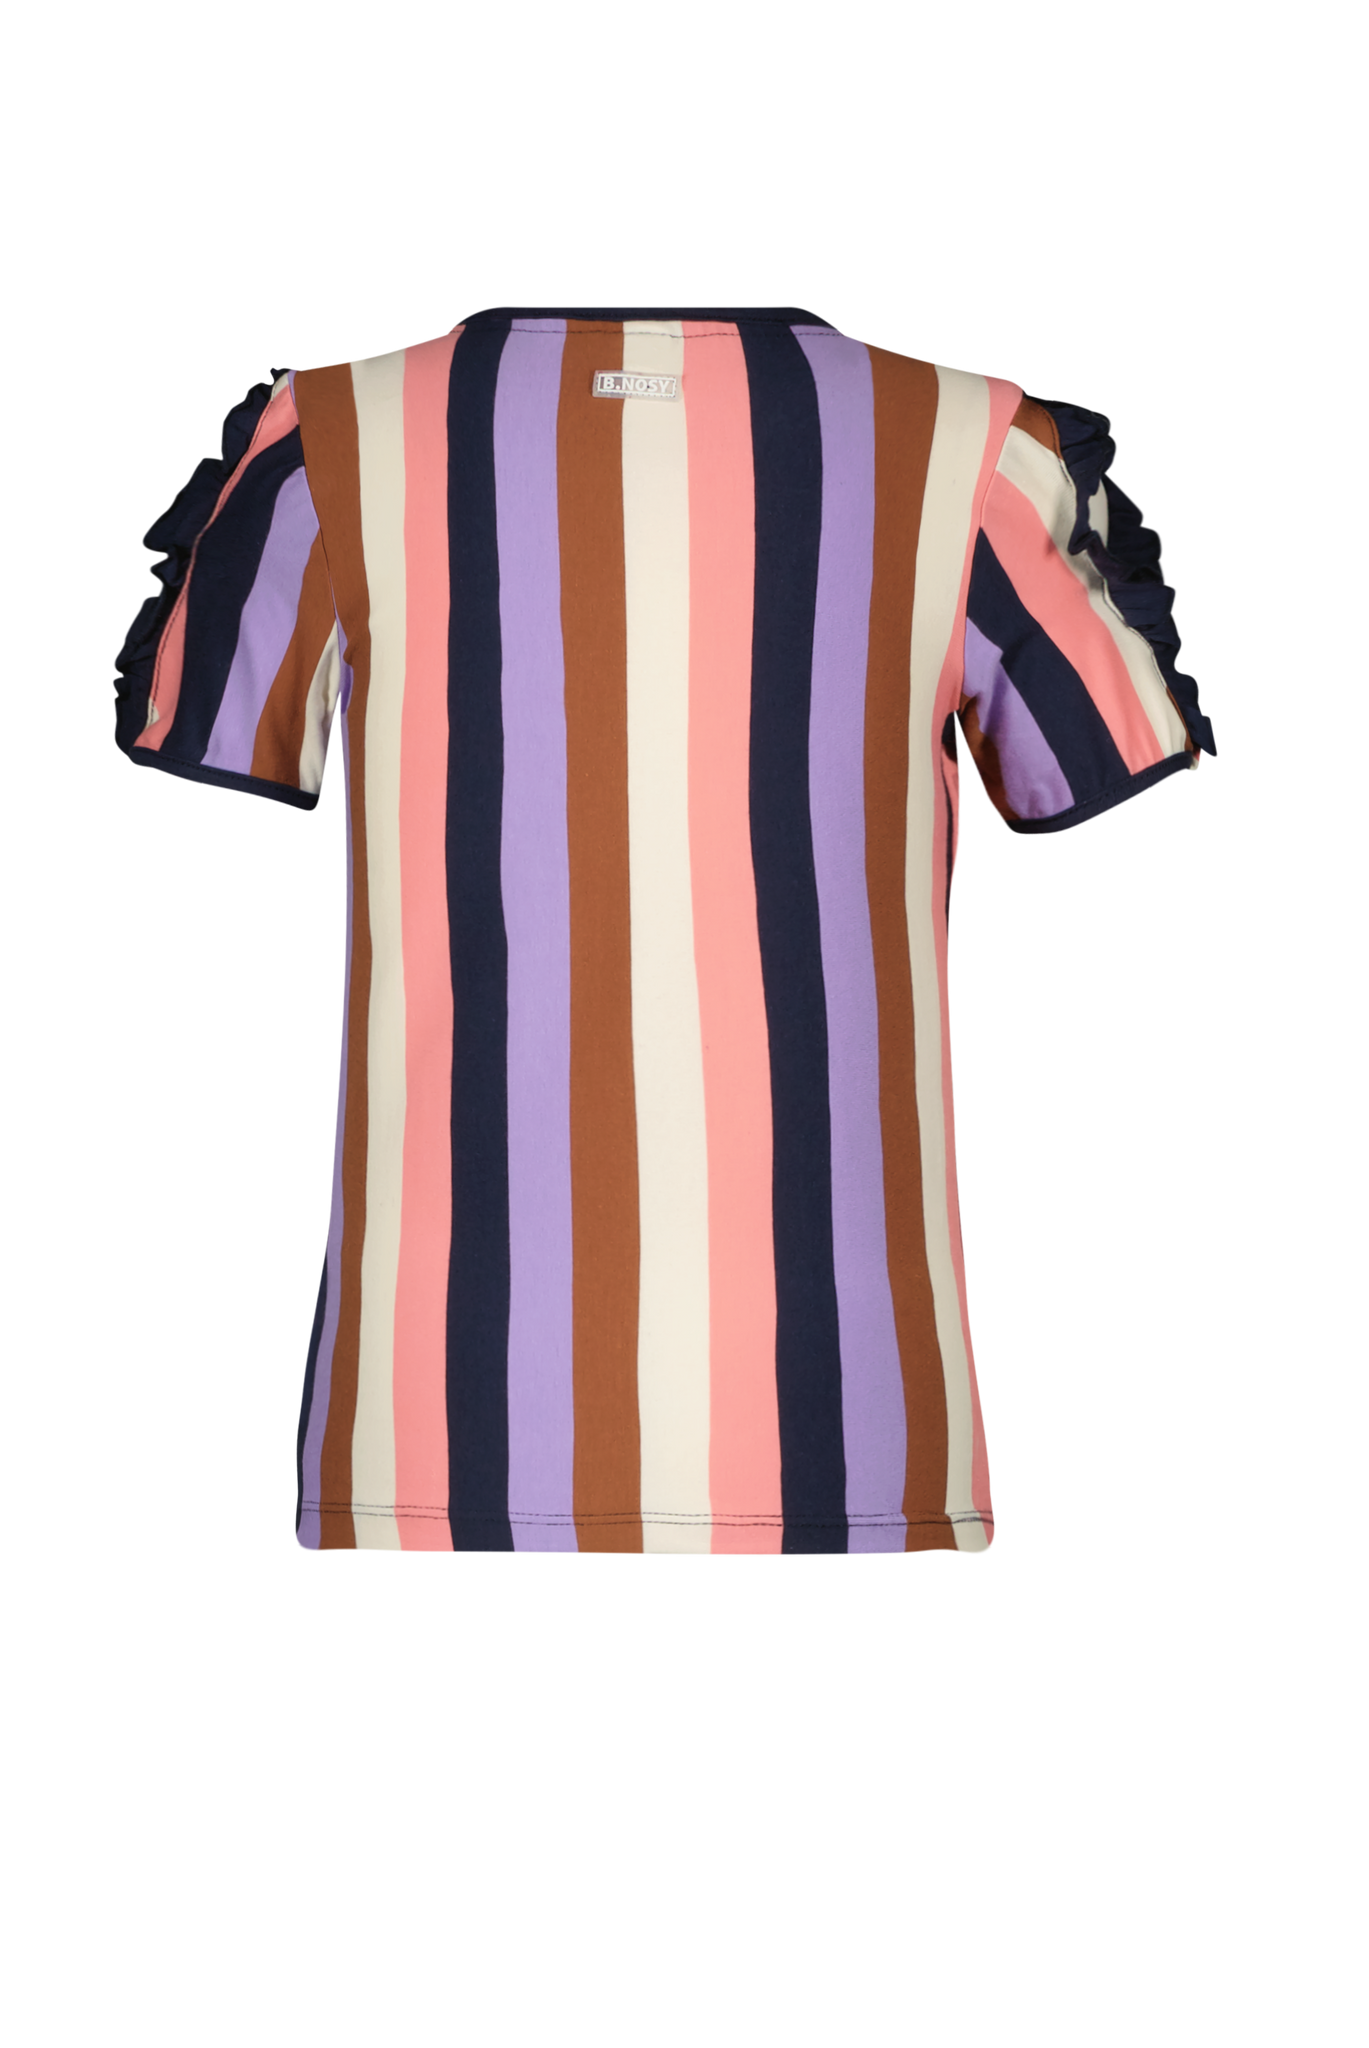 Girls ss shirt w/ open shoulder in multi color stripe